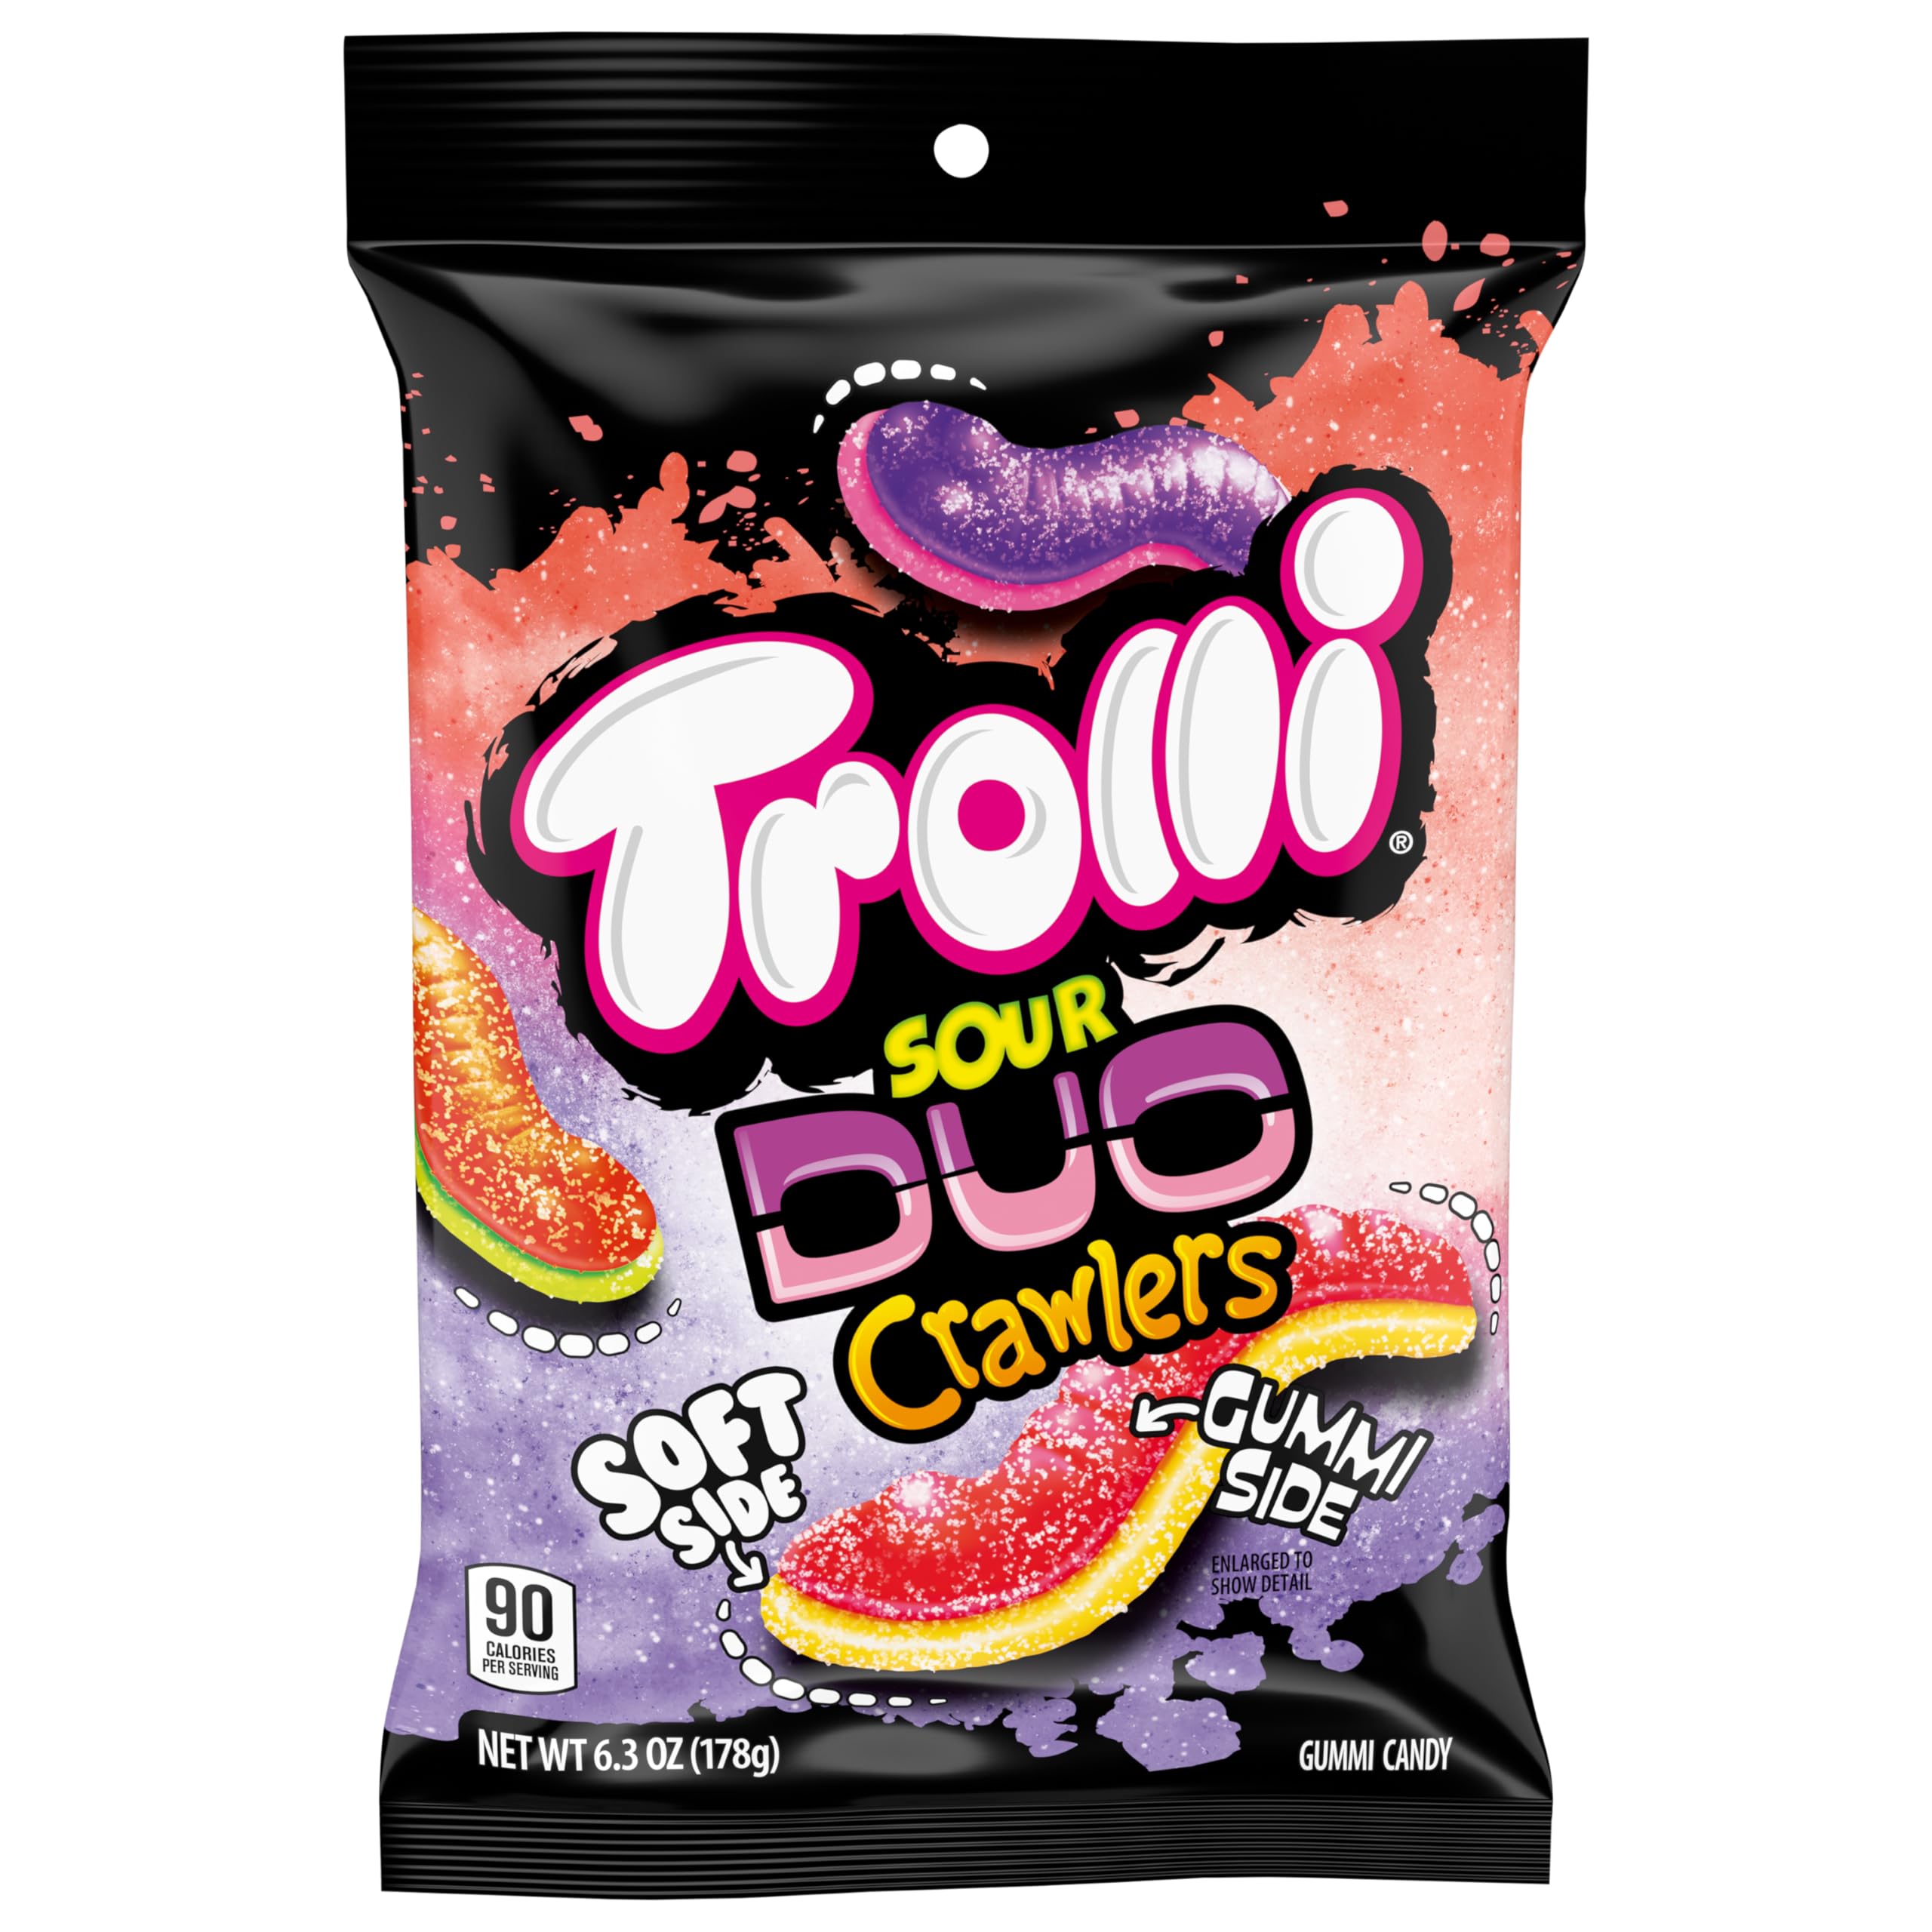 6.3-Oz Trolli Sour Brite Crawlers Candy (Duo Crawlers) $0.80 w/ S&S + Free Shipping w/ Prime or on $35+